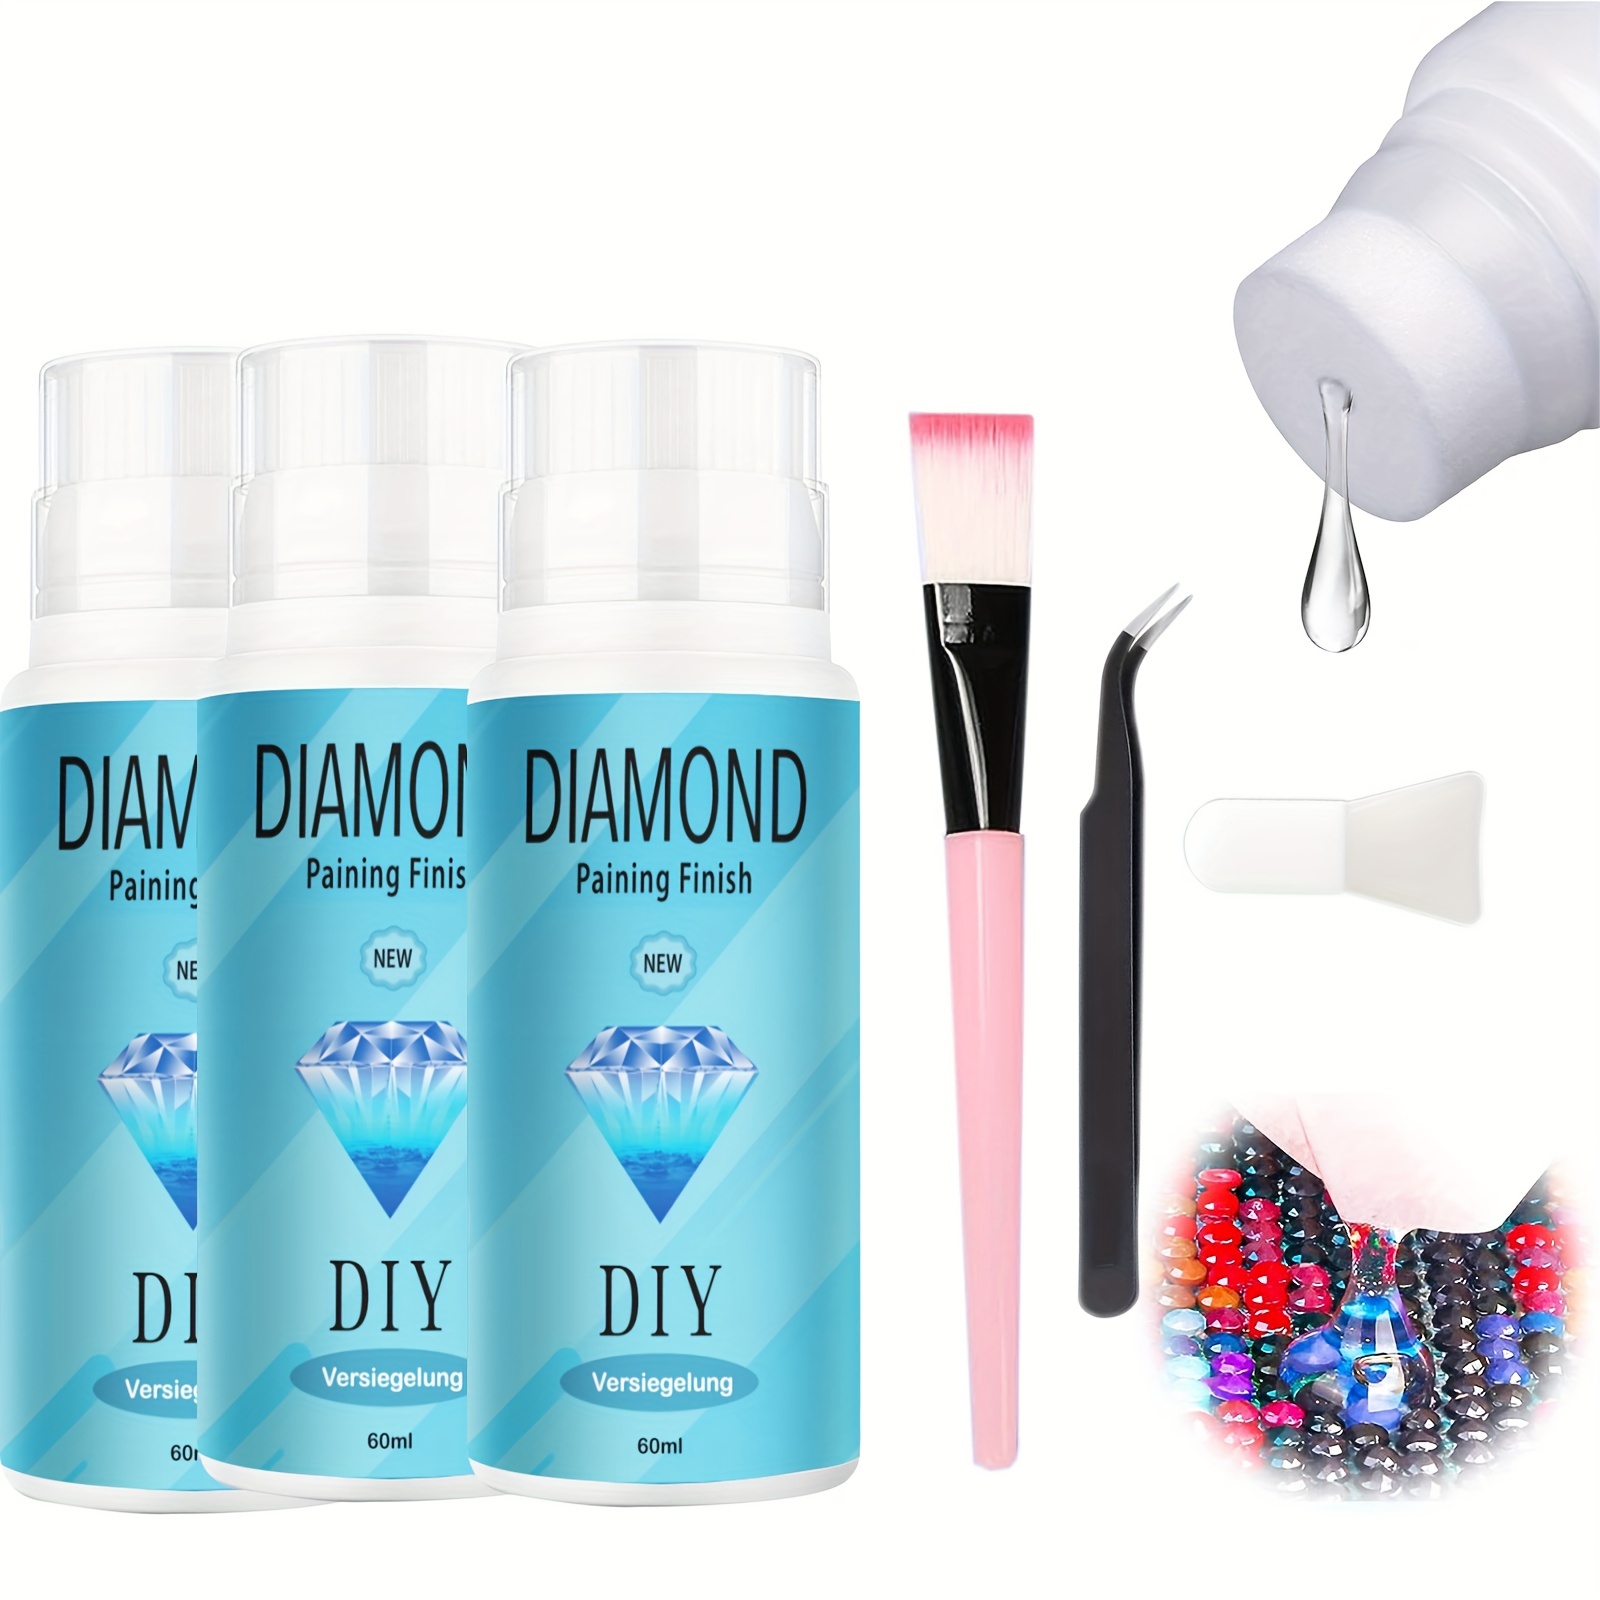 Diamond Painting Sealer Kits 240ML with Brushes, Diamond Art